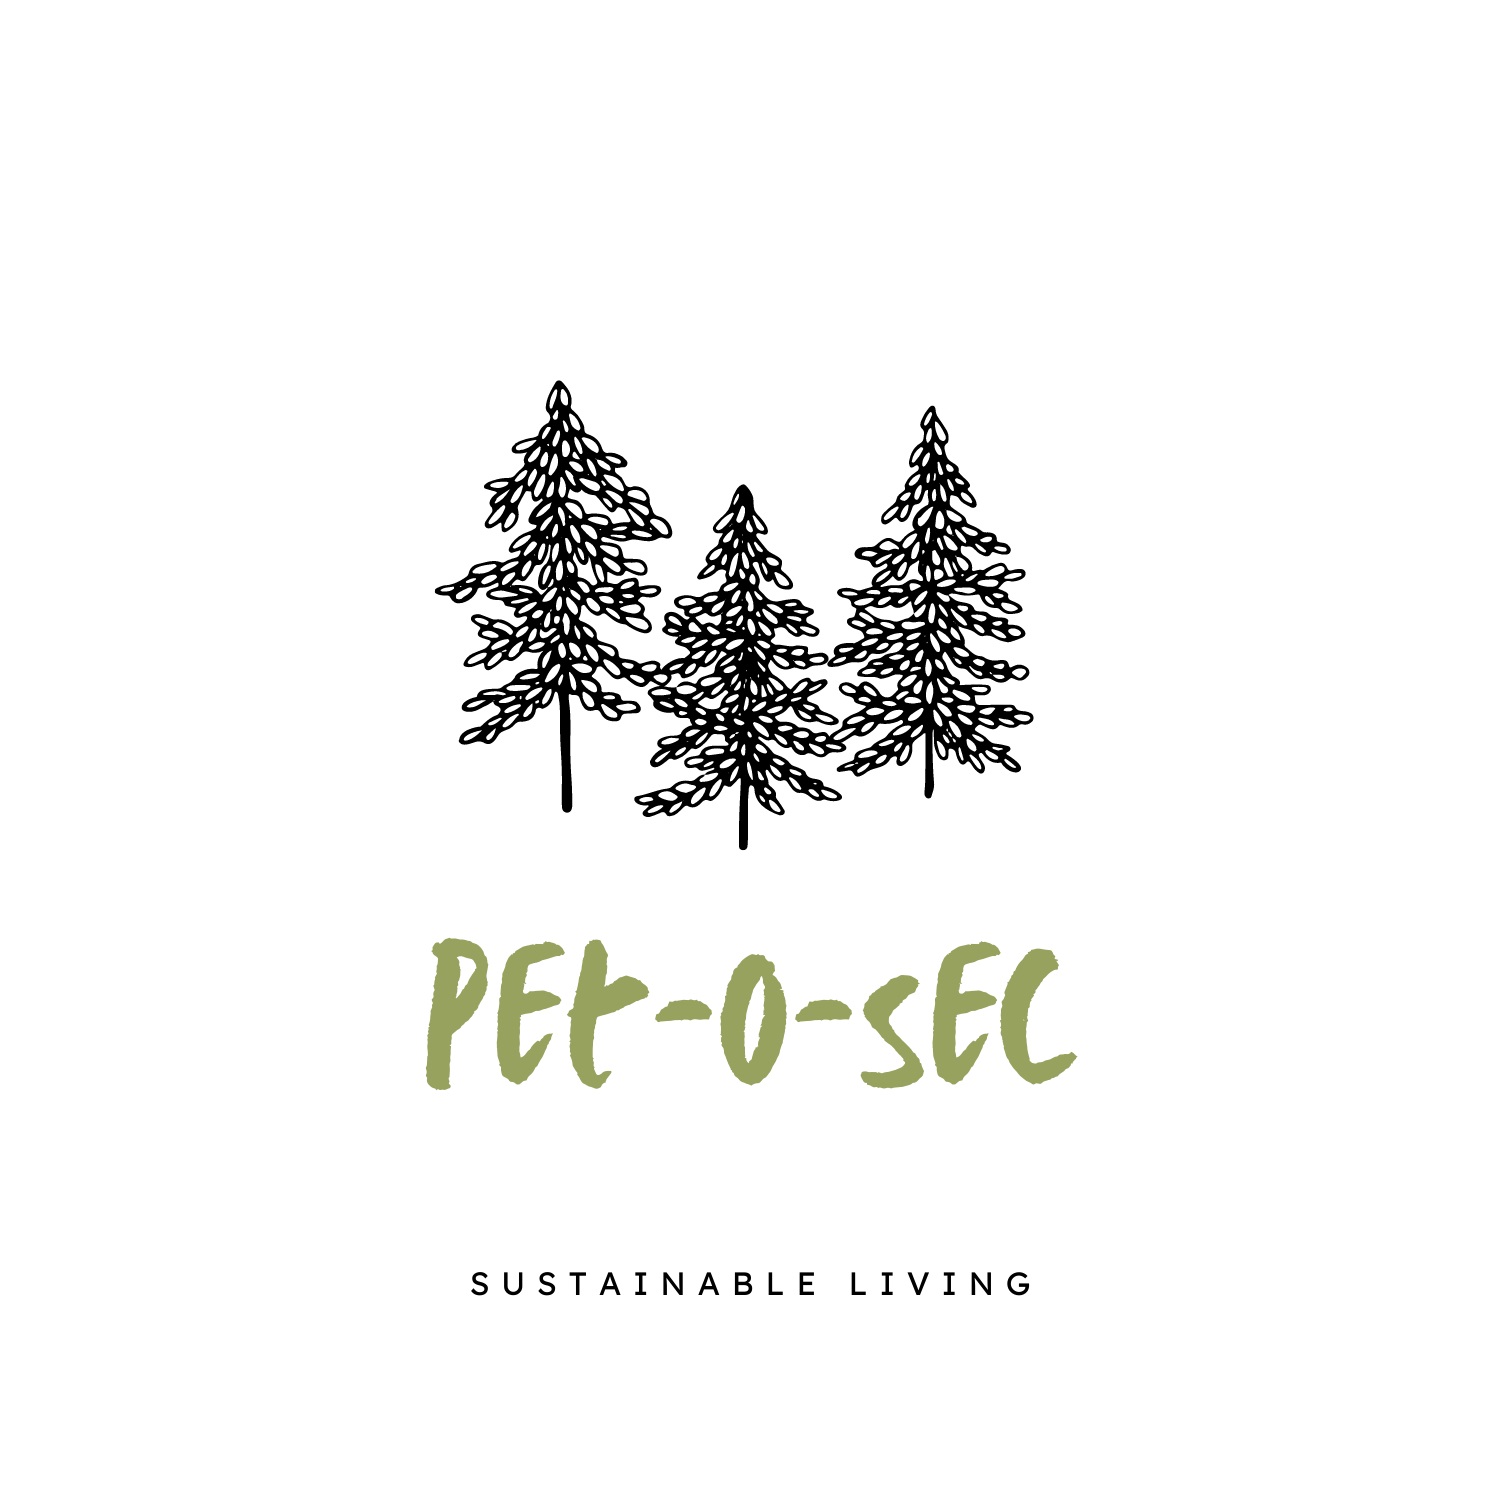 Logo-Pet-O-Sec.jpg